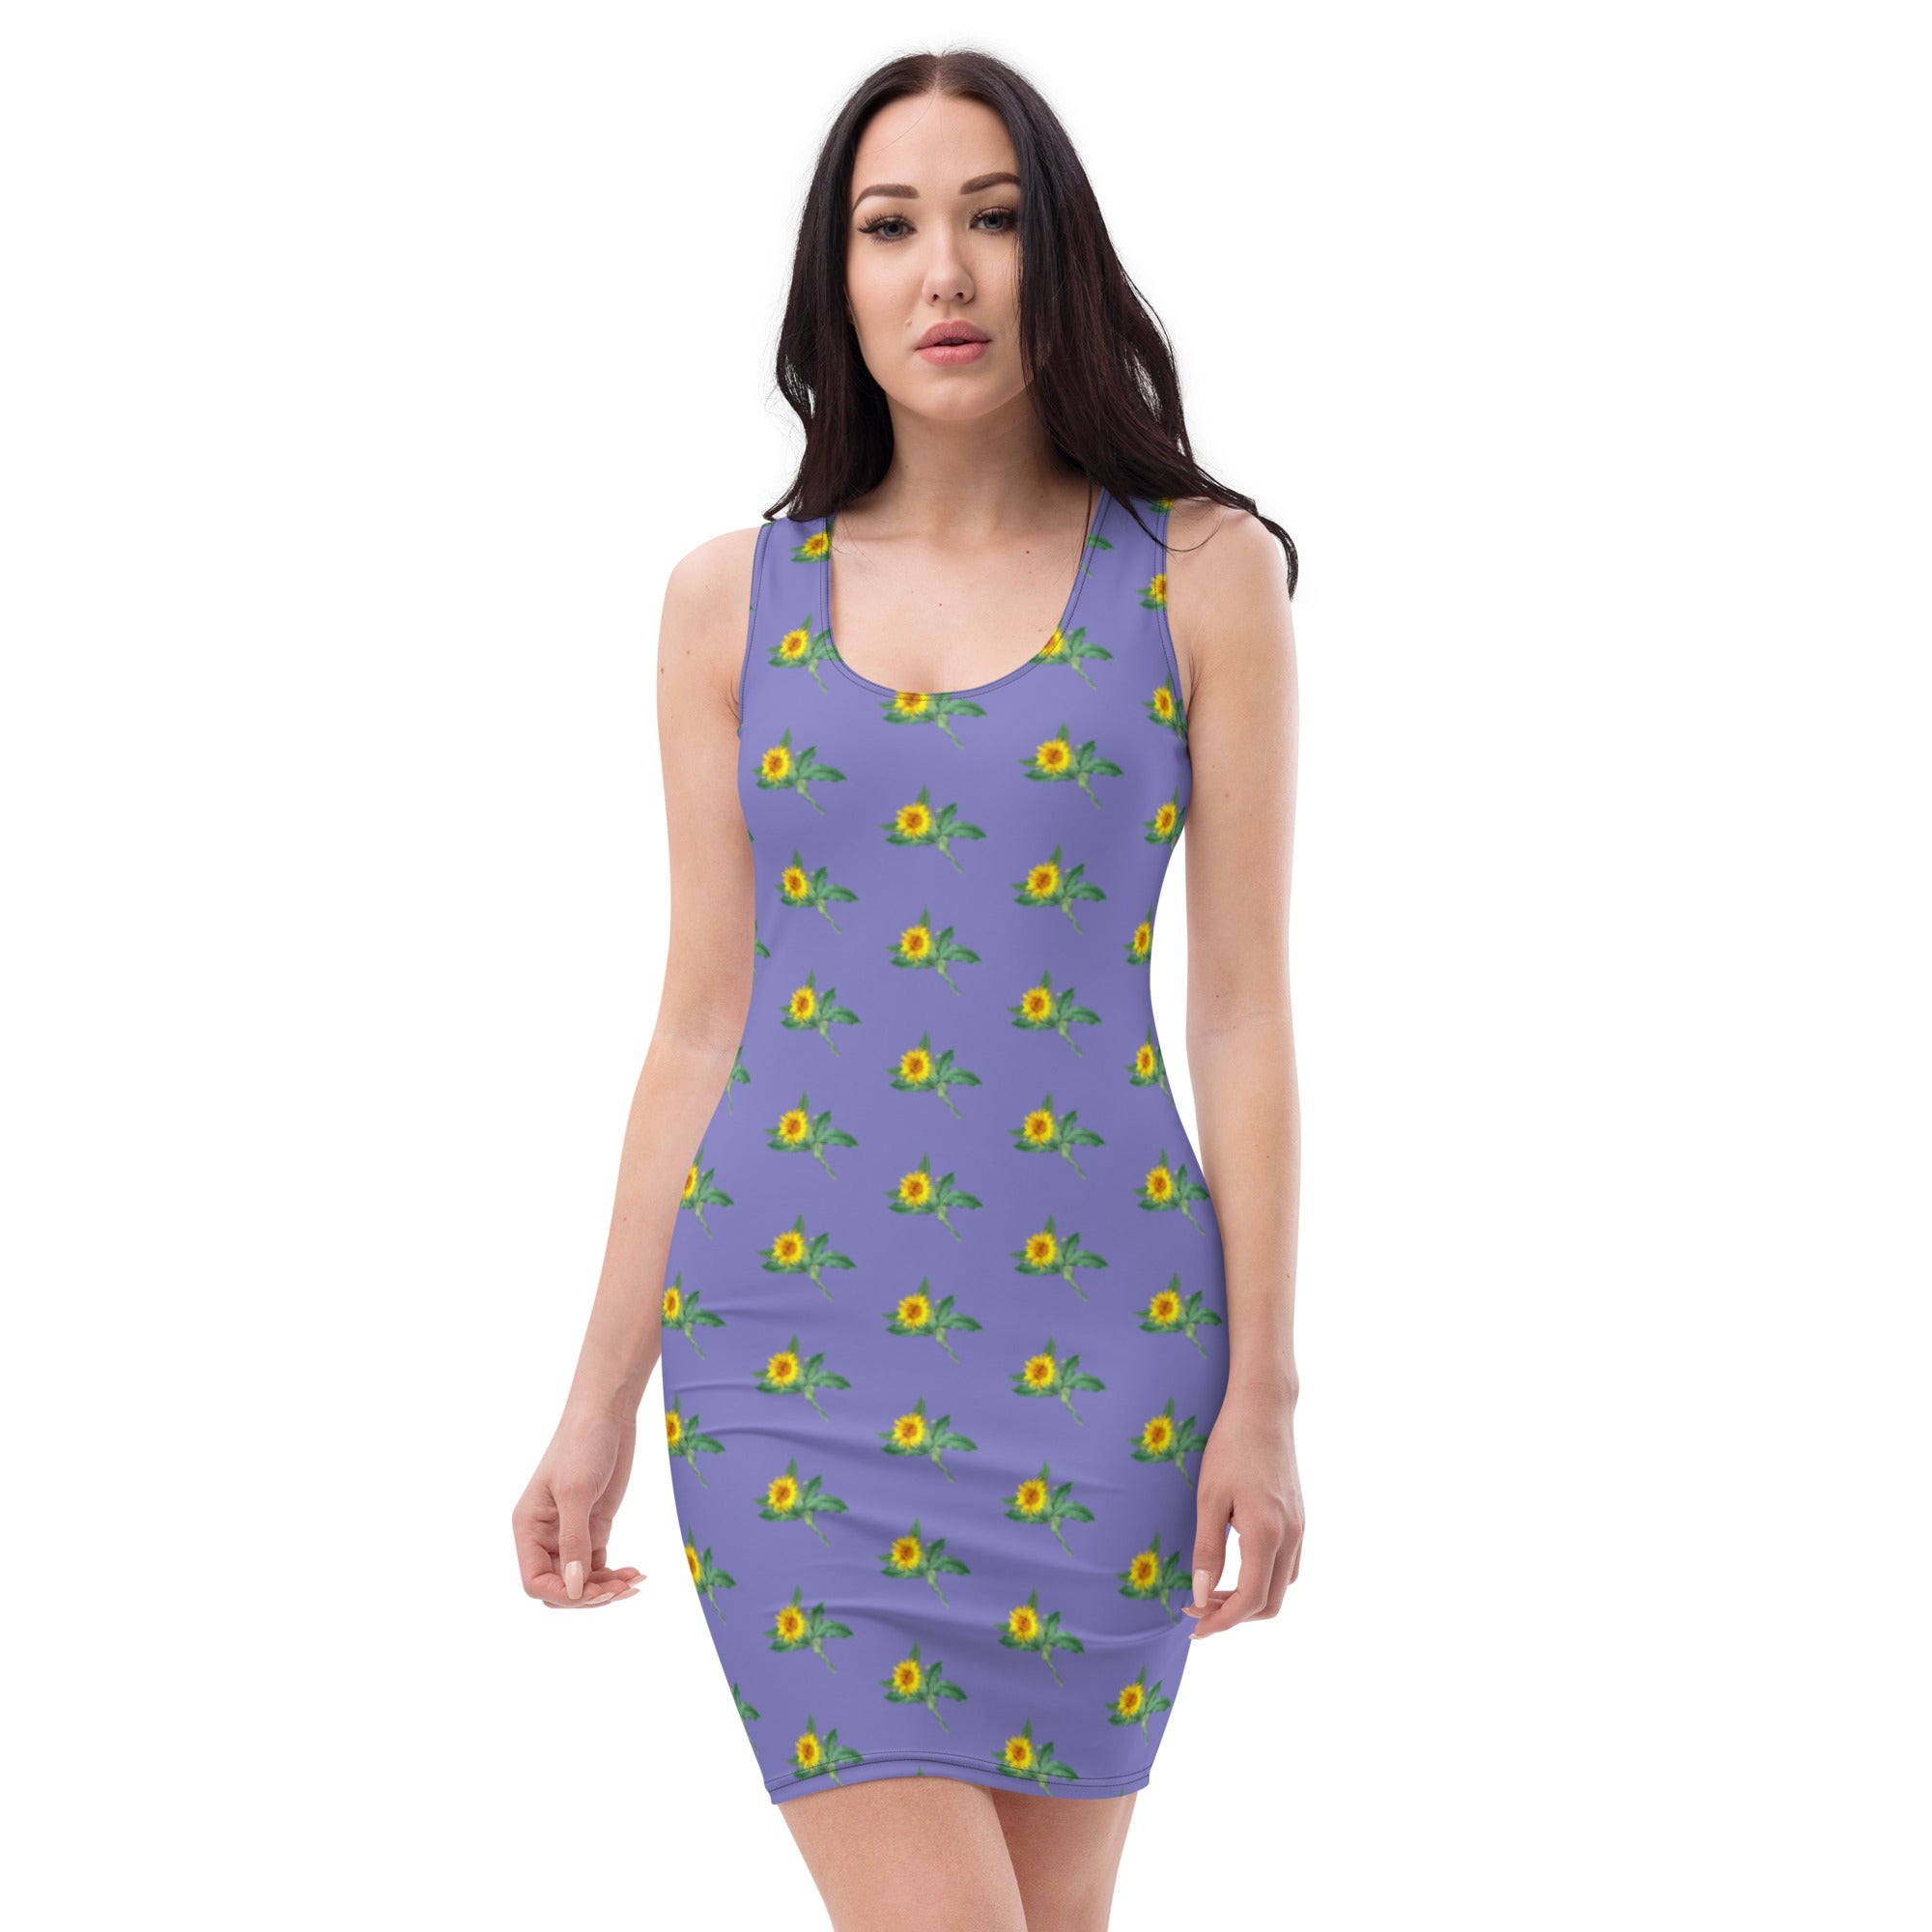 Pastel Purple Sunflower Dress, Sunflower Print Cute Designer Bestselling Premium Quality Flower Printed Women's Sleeveless Dress-Made in USA/EU/MX (US Size: XS-XL)